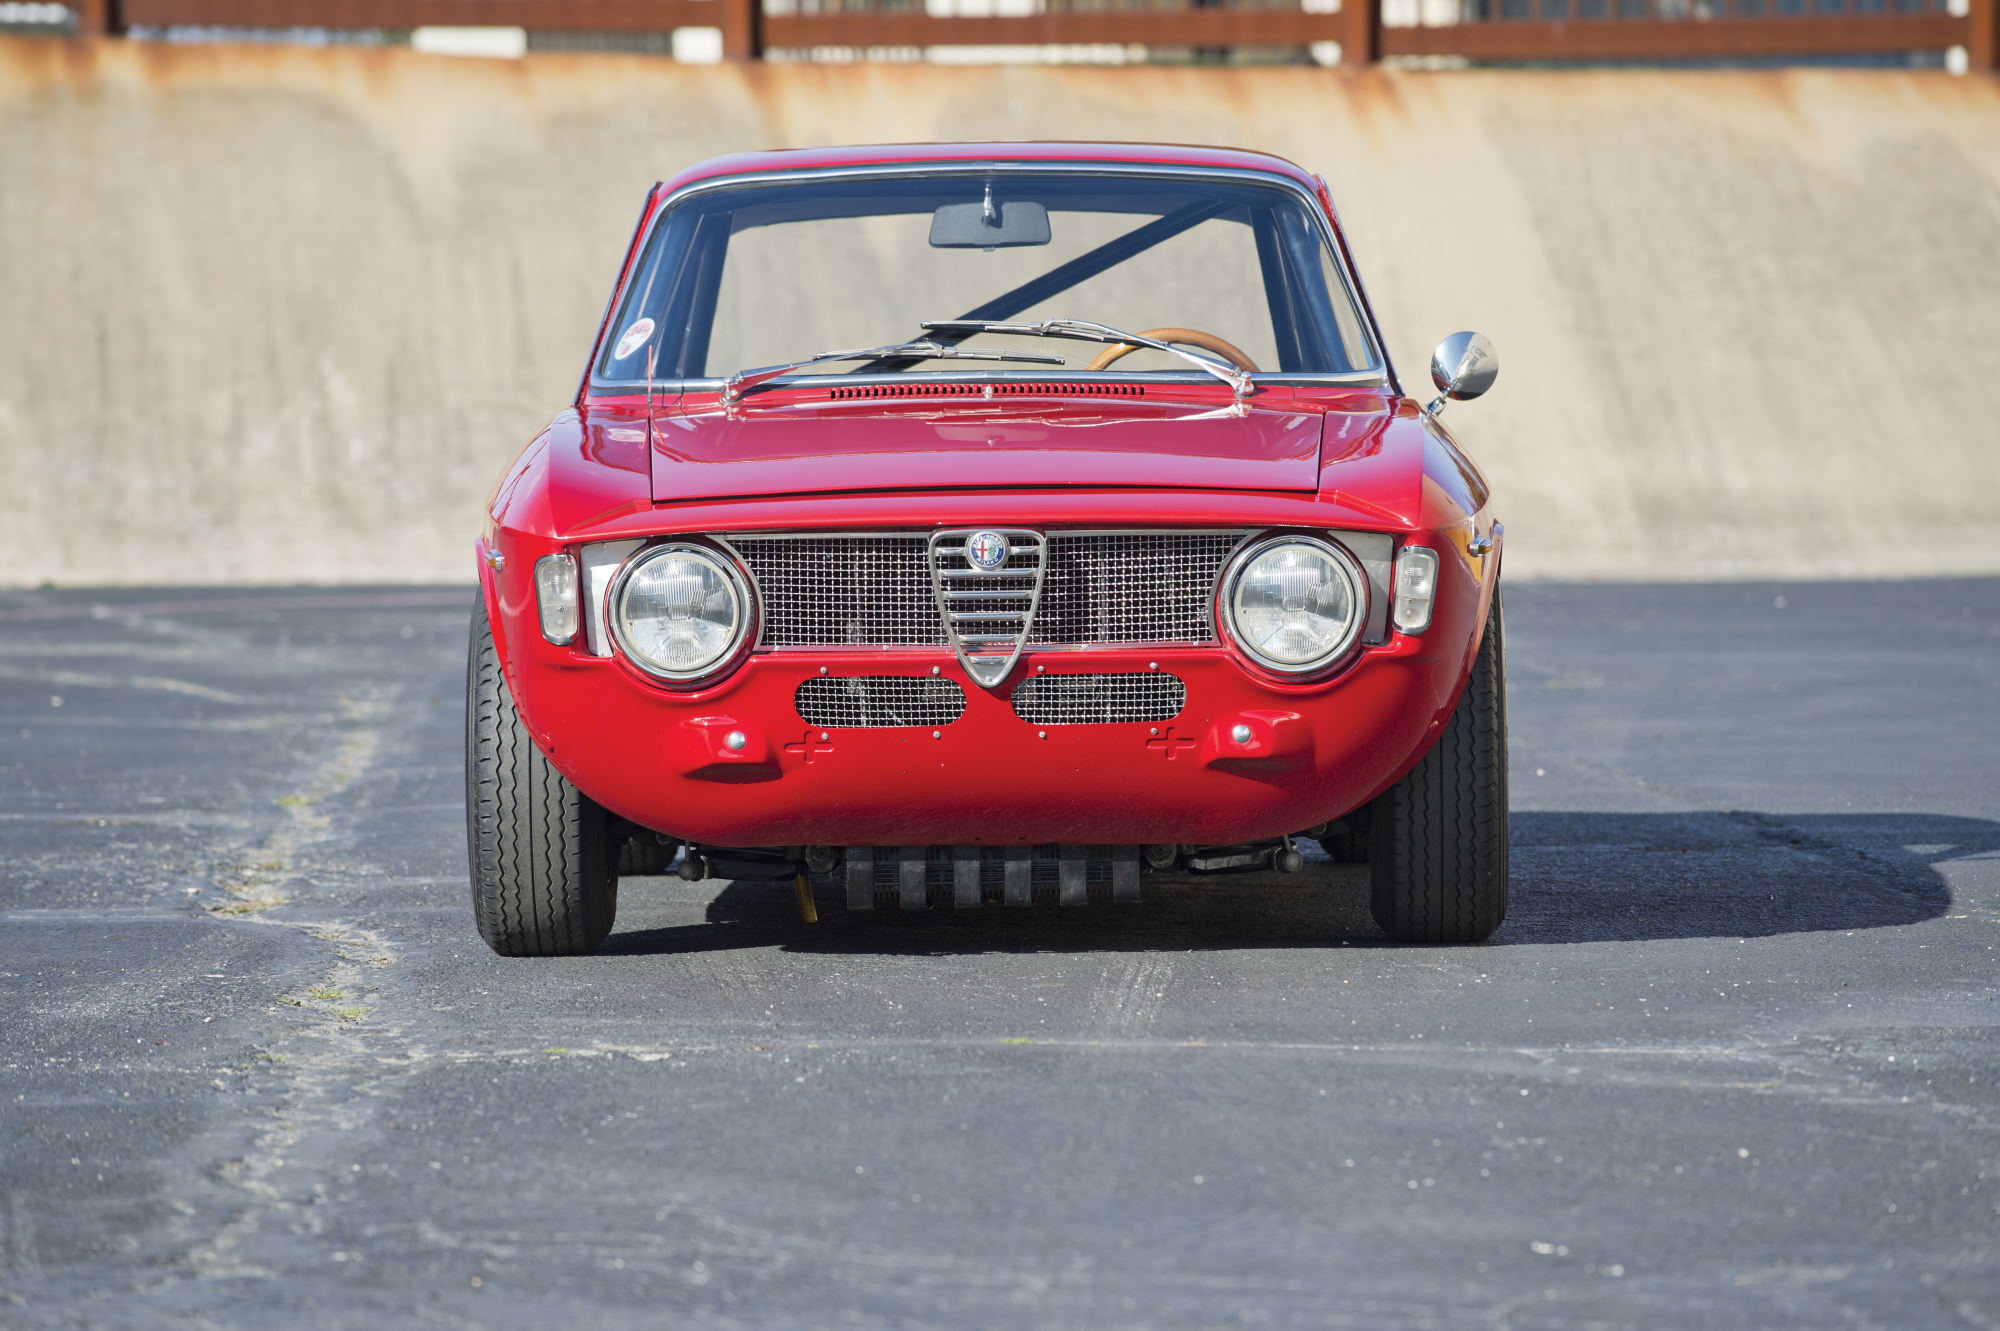 Amazing Alfa Romeo Giulia GTA Pictures & Backgrounds